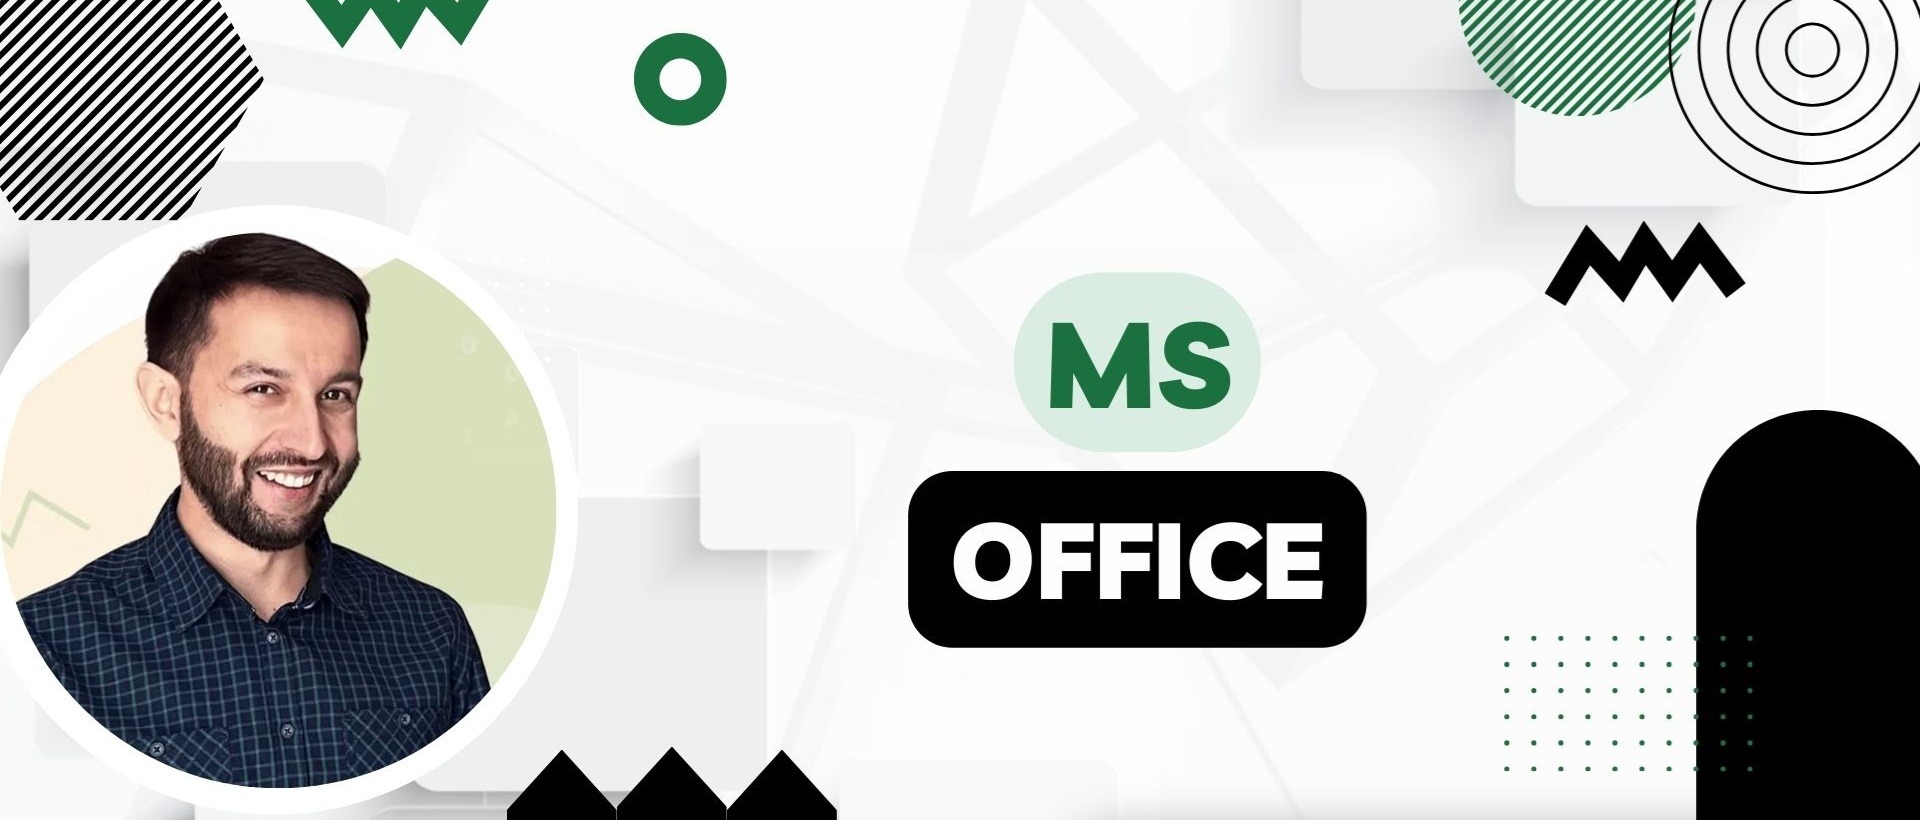 Kemsoft.pl MS Office